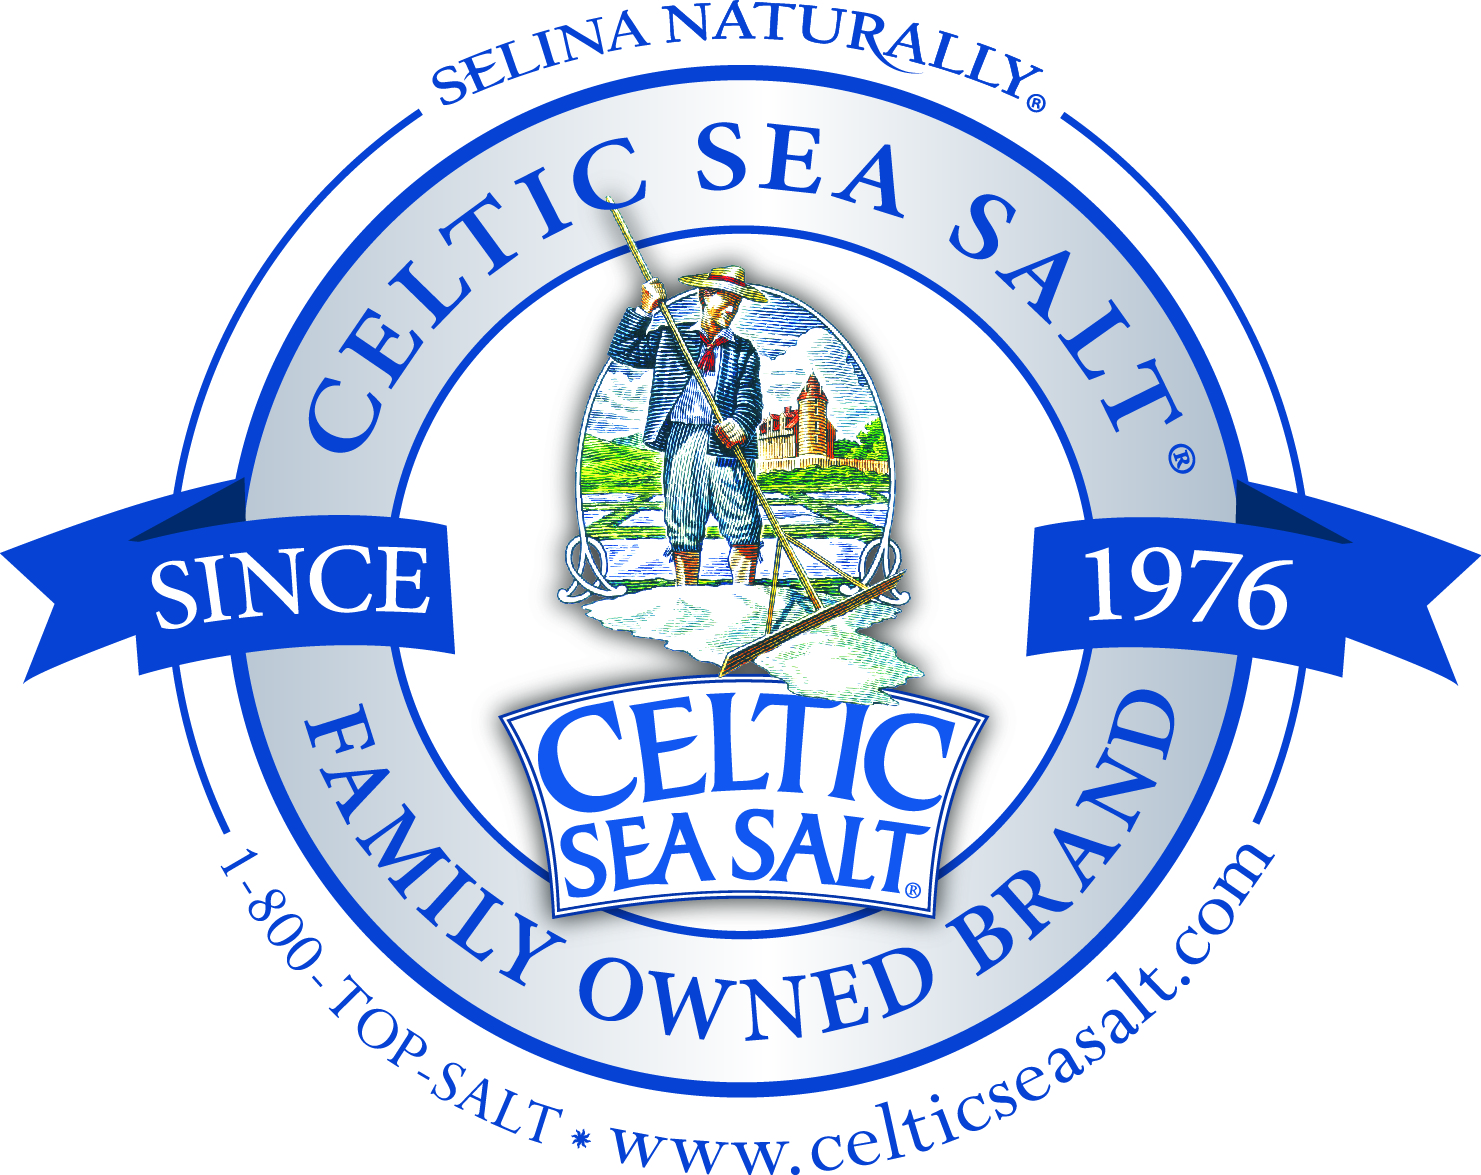 Selina Naturally home of the Celtic Sea Salt Brand